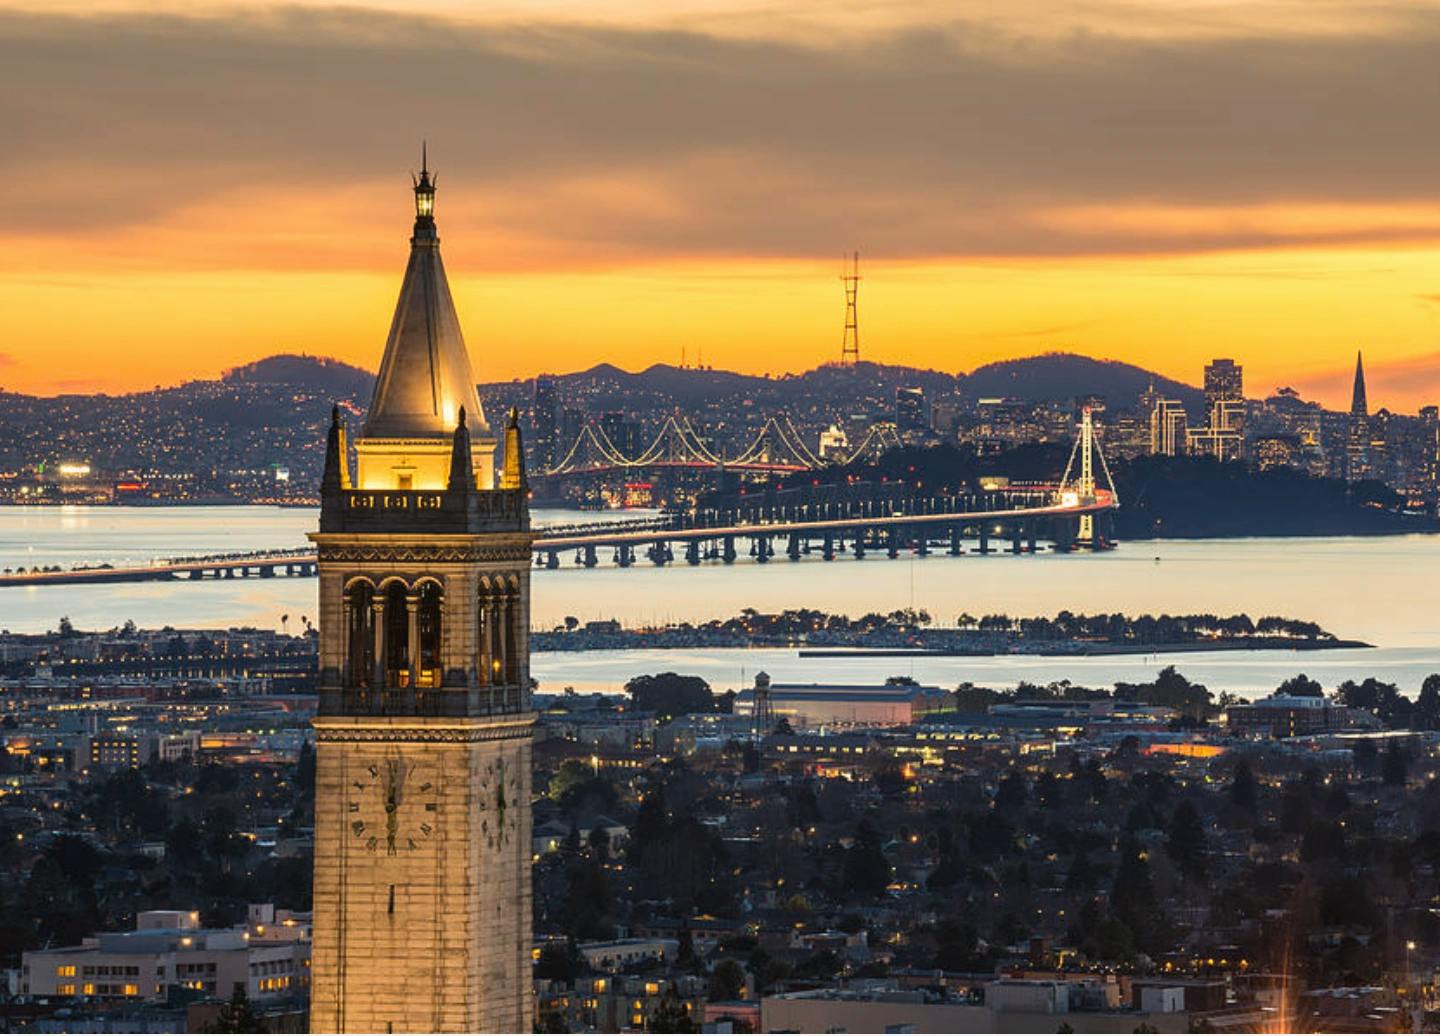 Image of the beautiful city of Berkeley